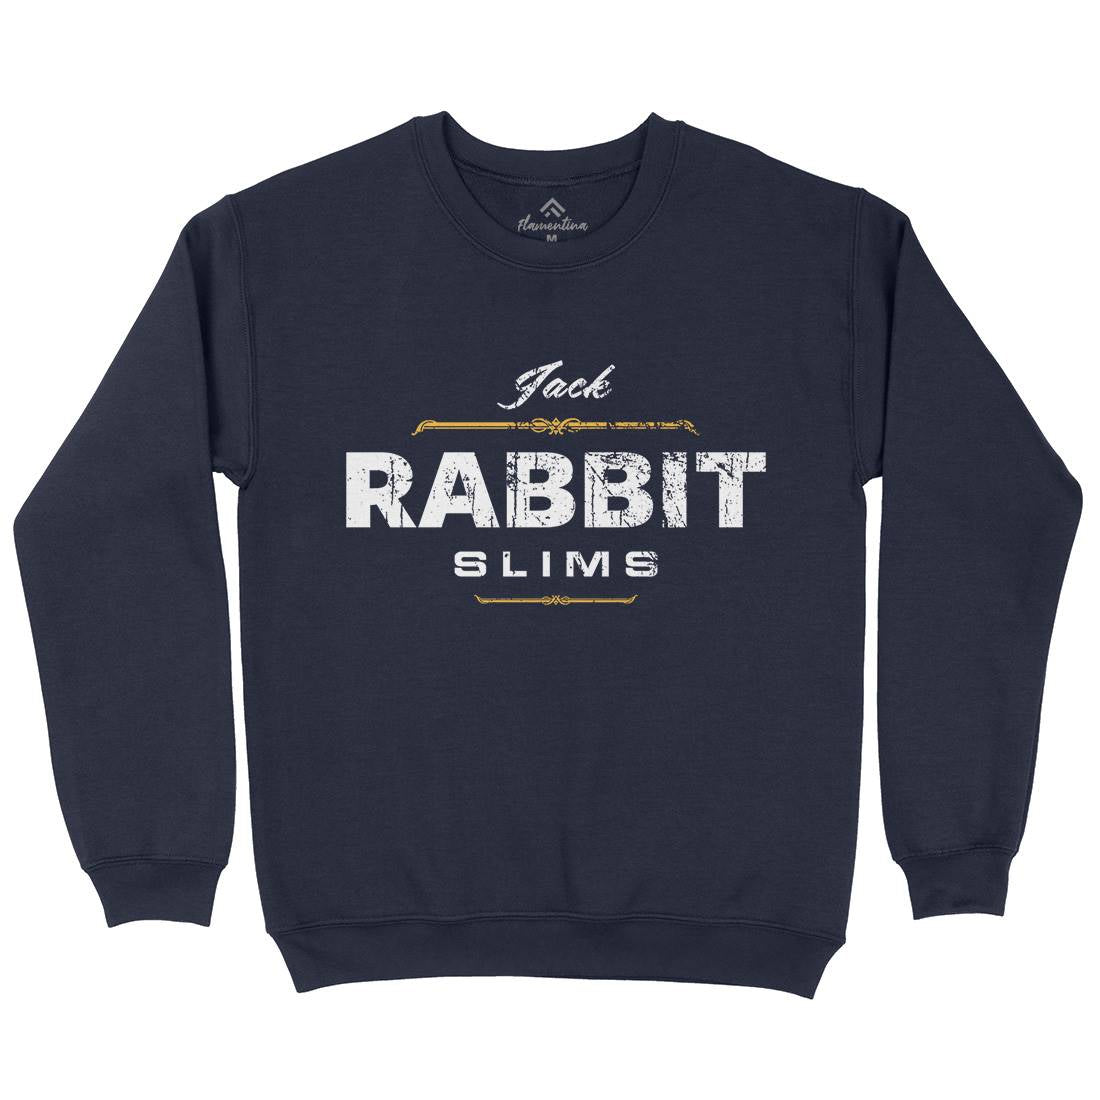 Jack Rabbit Slims Kids Crew Neck Sweatshirt Retro D383